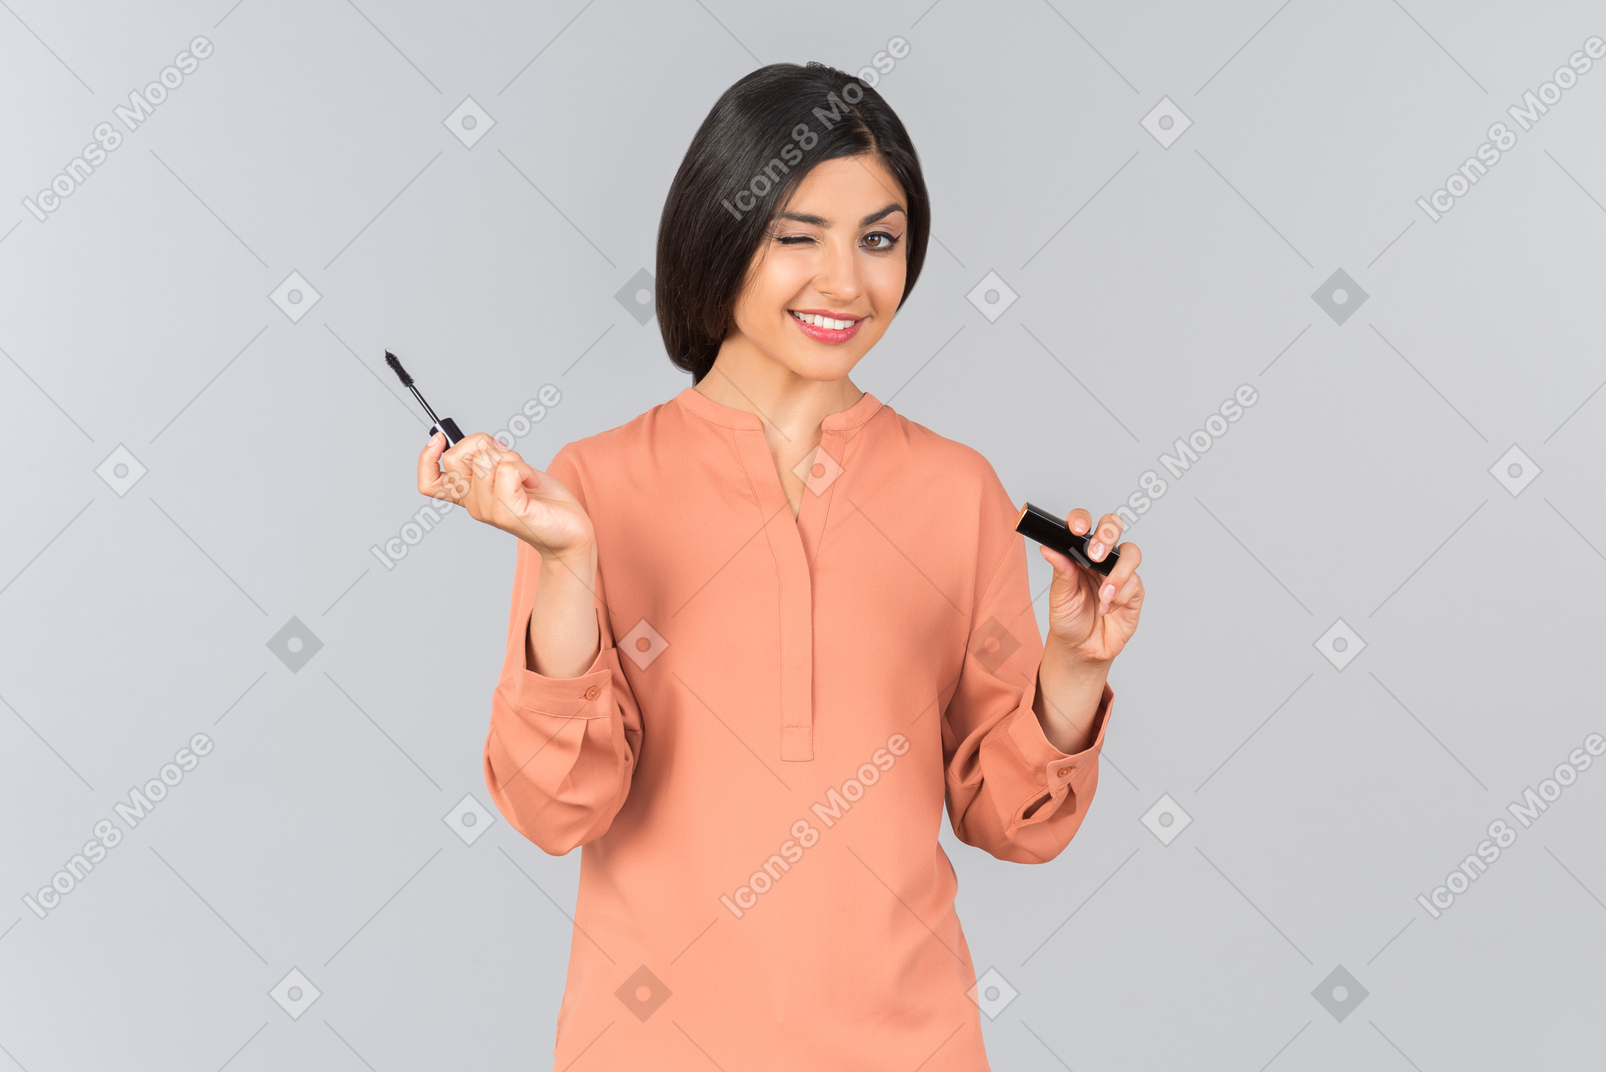 Indian girl applying mascara and winking